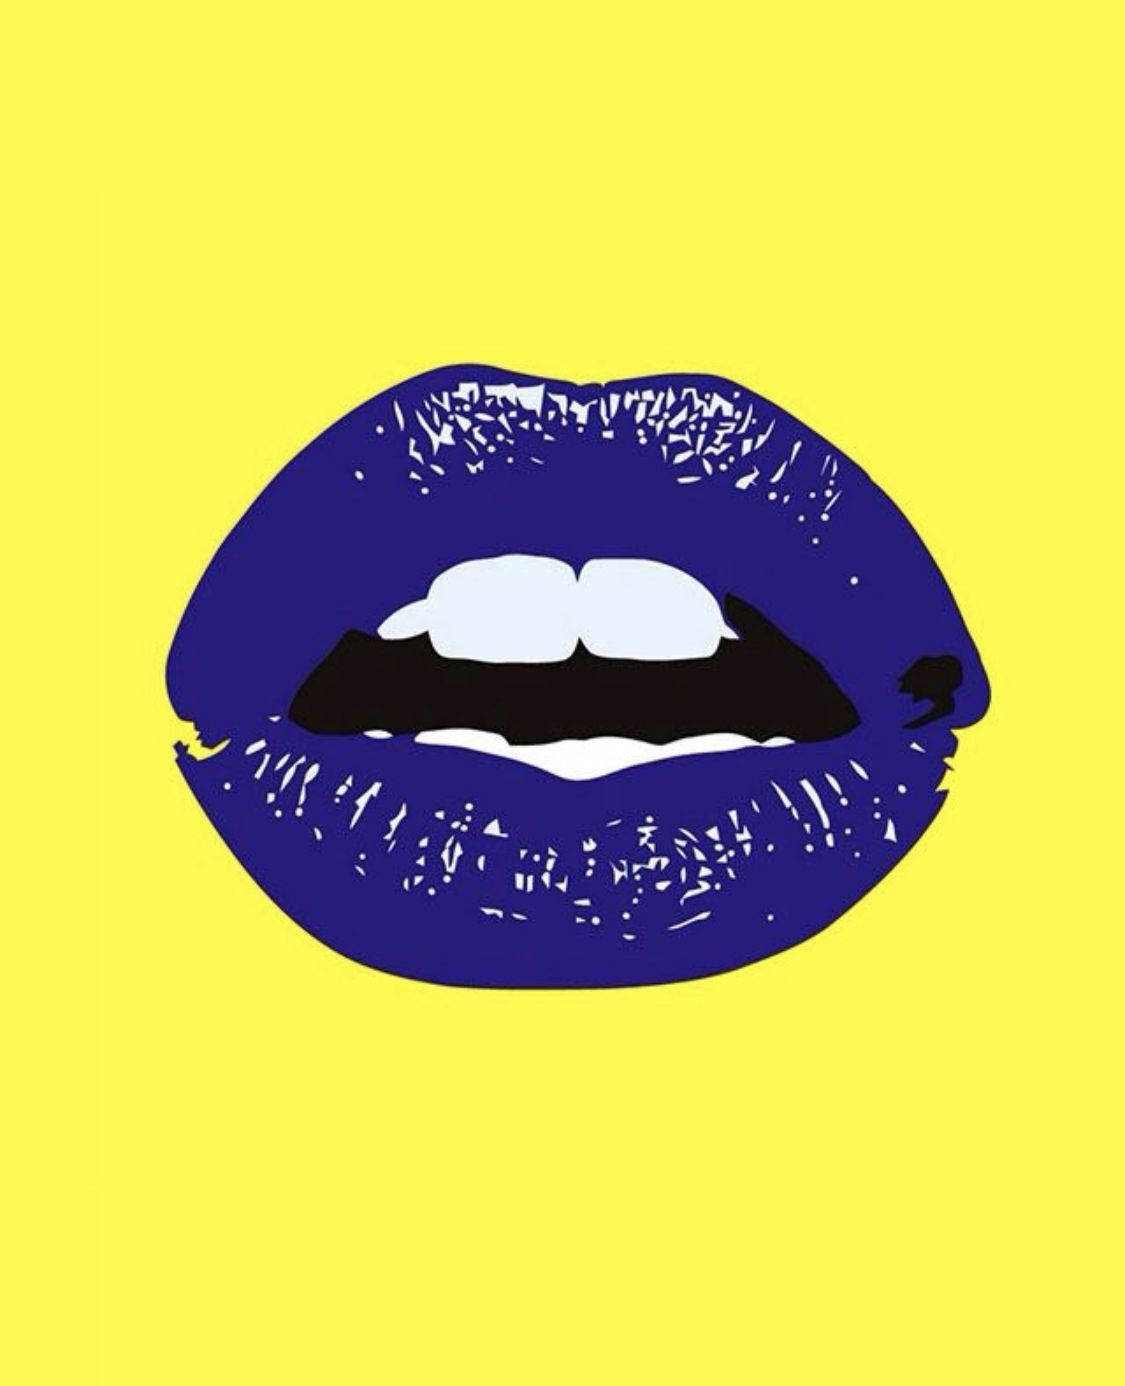 pop art lips wallpaper